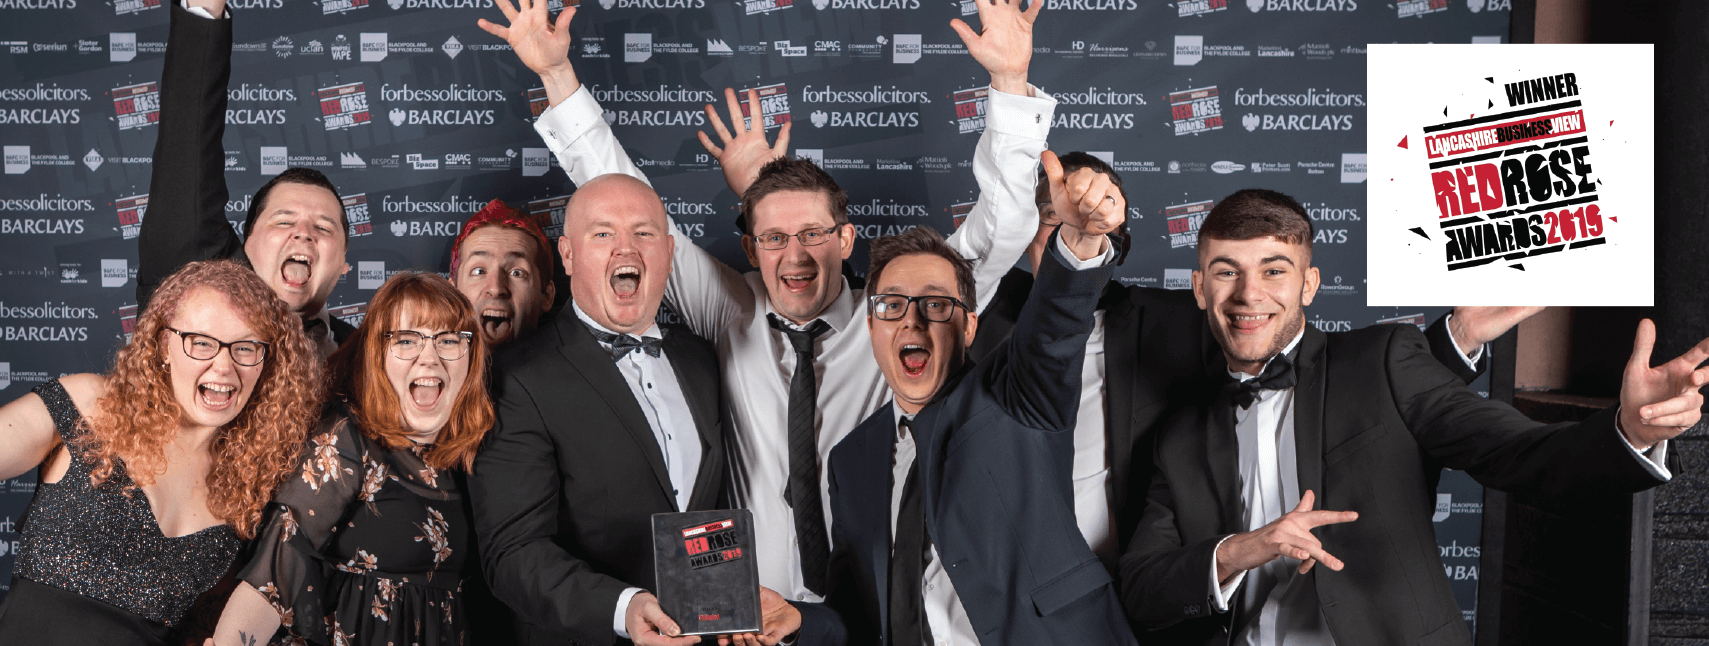 21Digital wins Best Digital Business 2019 at the Red Rose Awards!